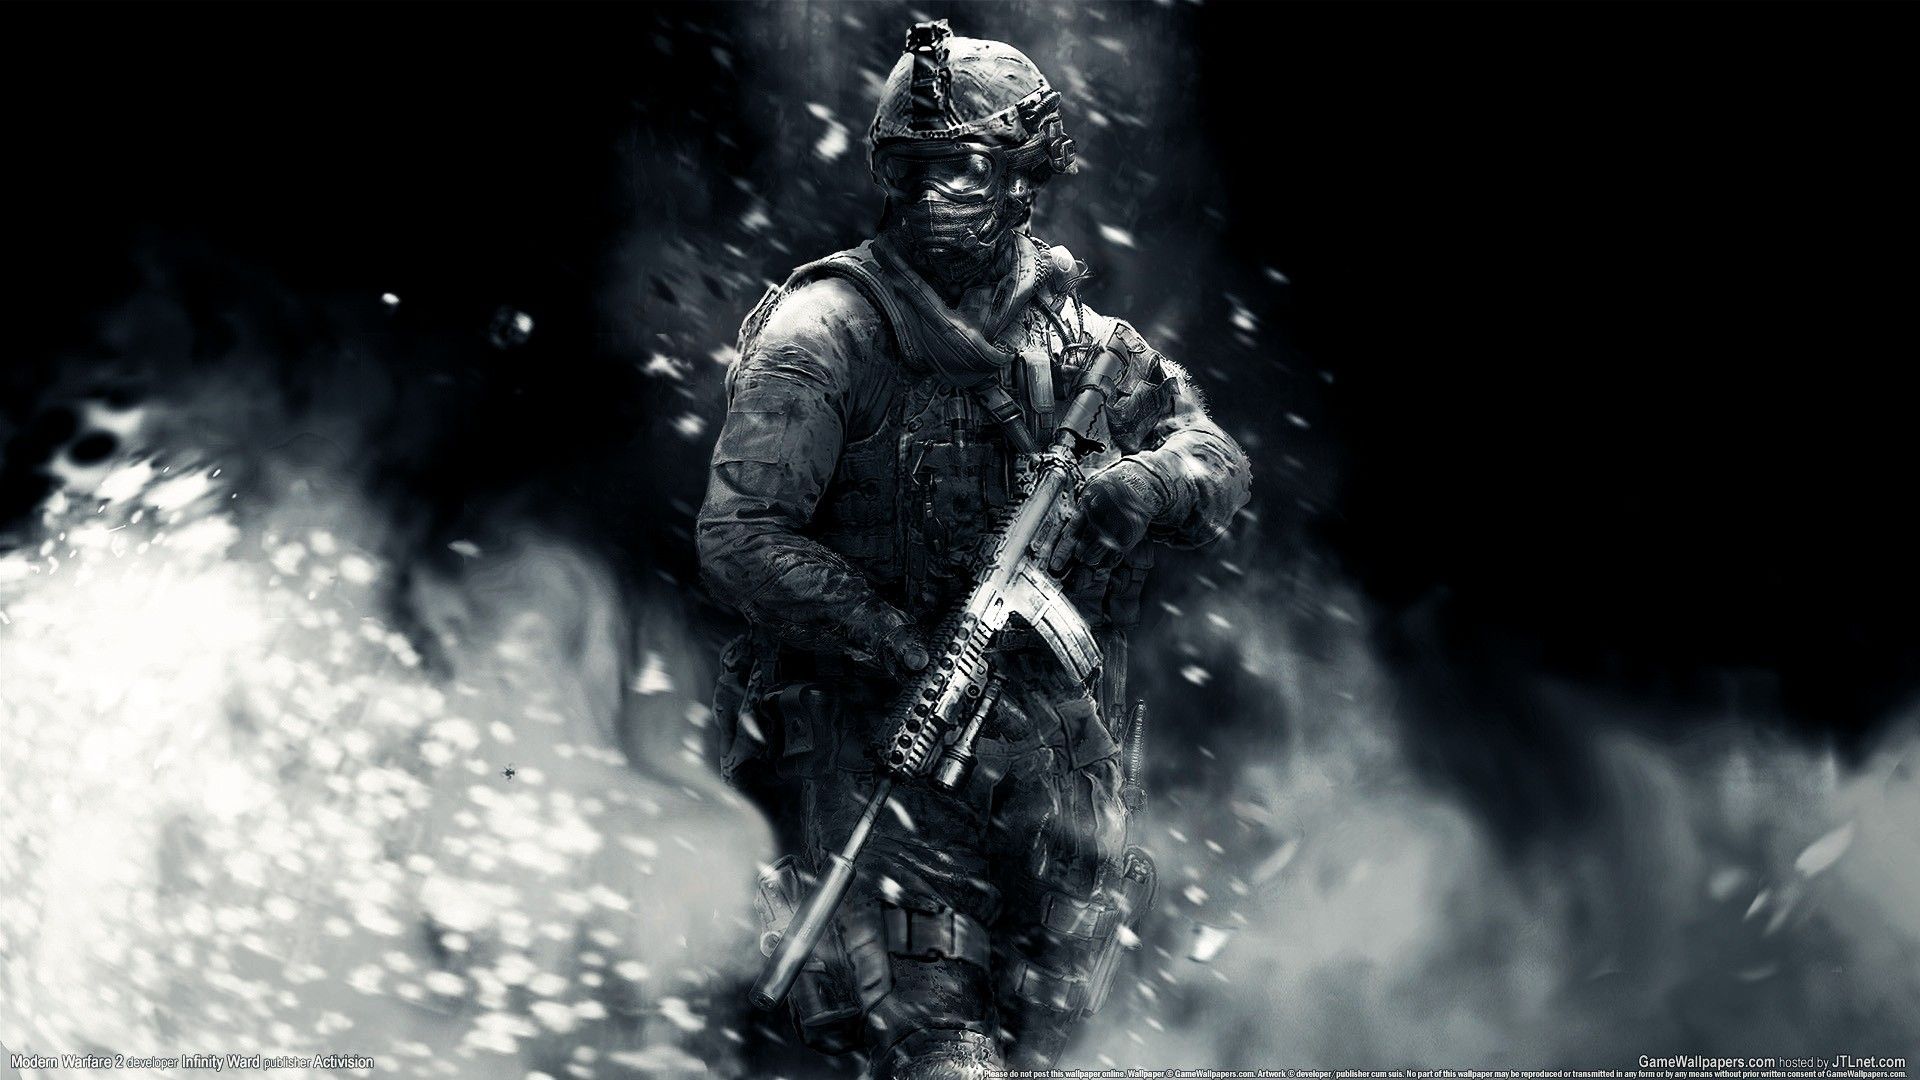 FHDQ Wallpaper: Call Of Duty Wallpaper, Call Of Duty Photo. Call of duty, Black HD wallpaper, Call of duty black